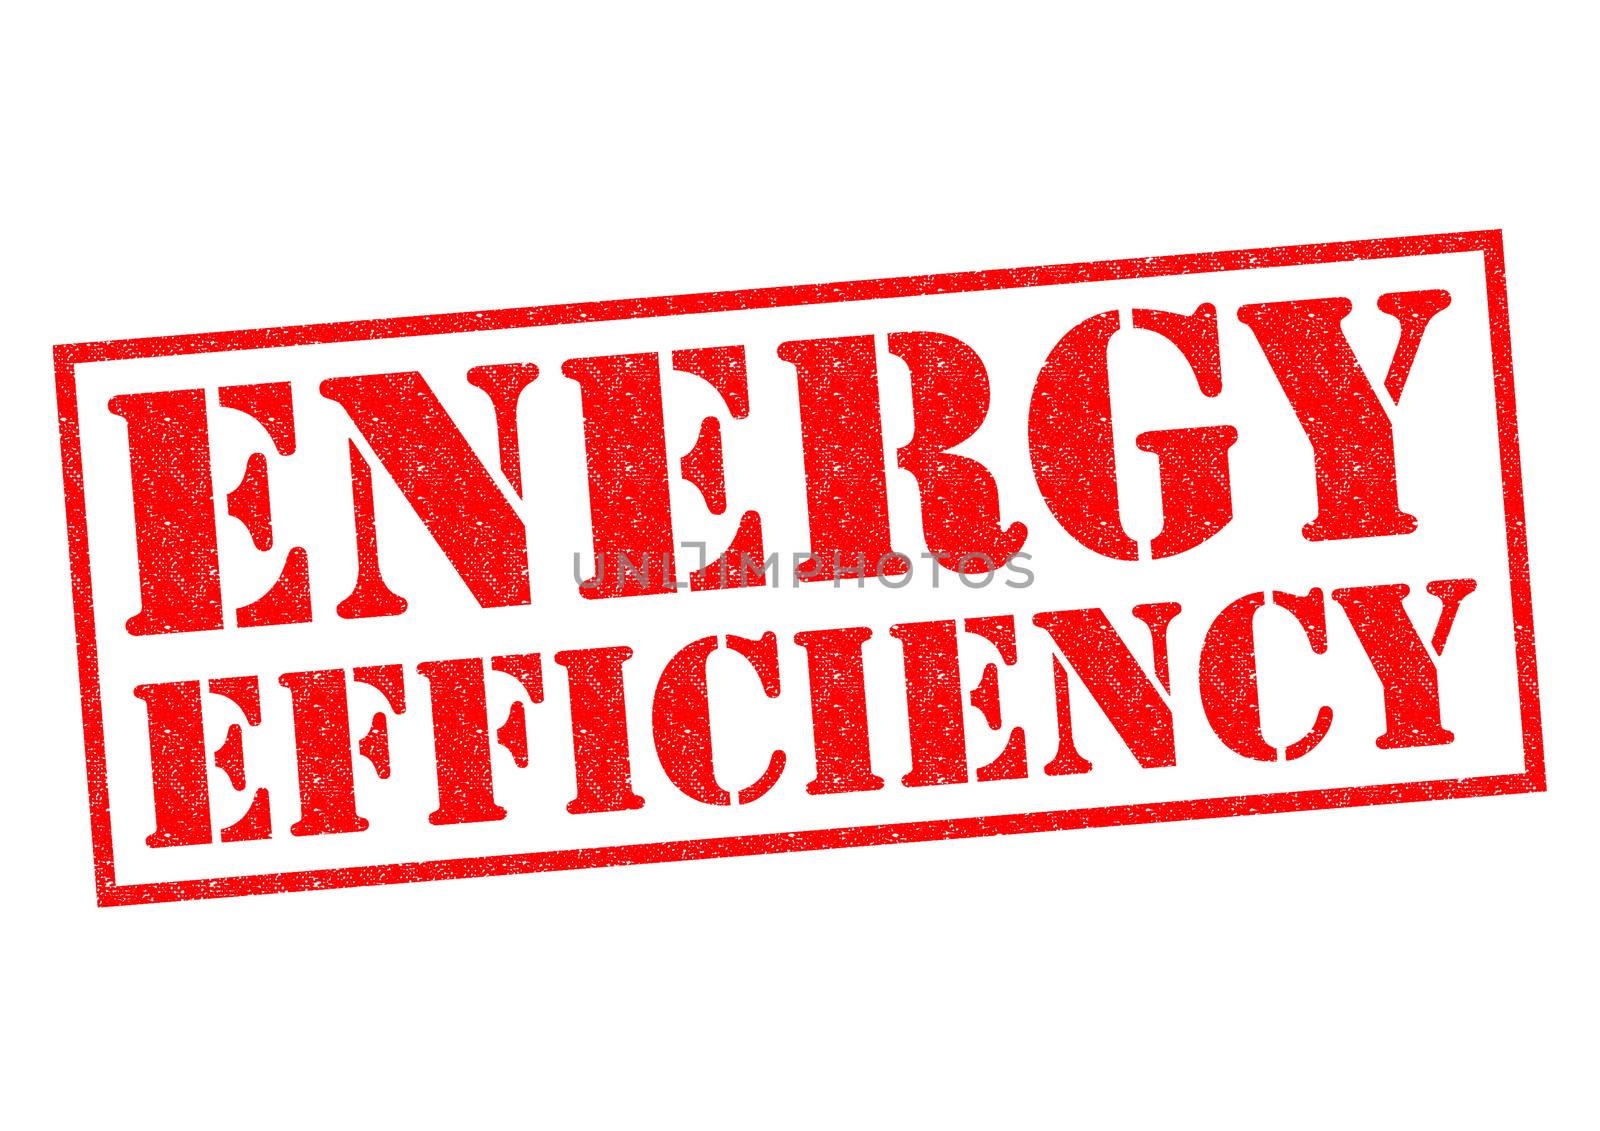 ENERGY EFFICIENCY by chrisdorney